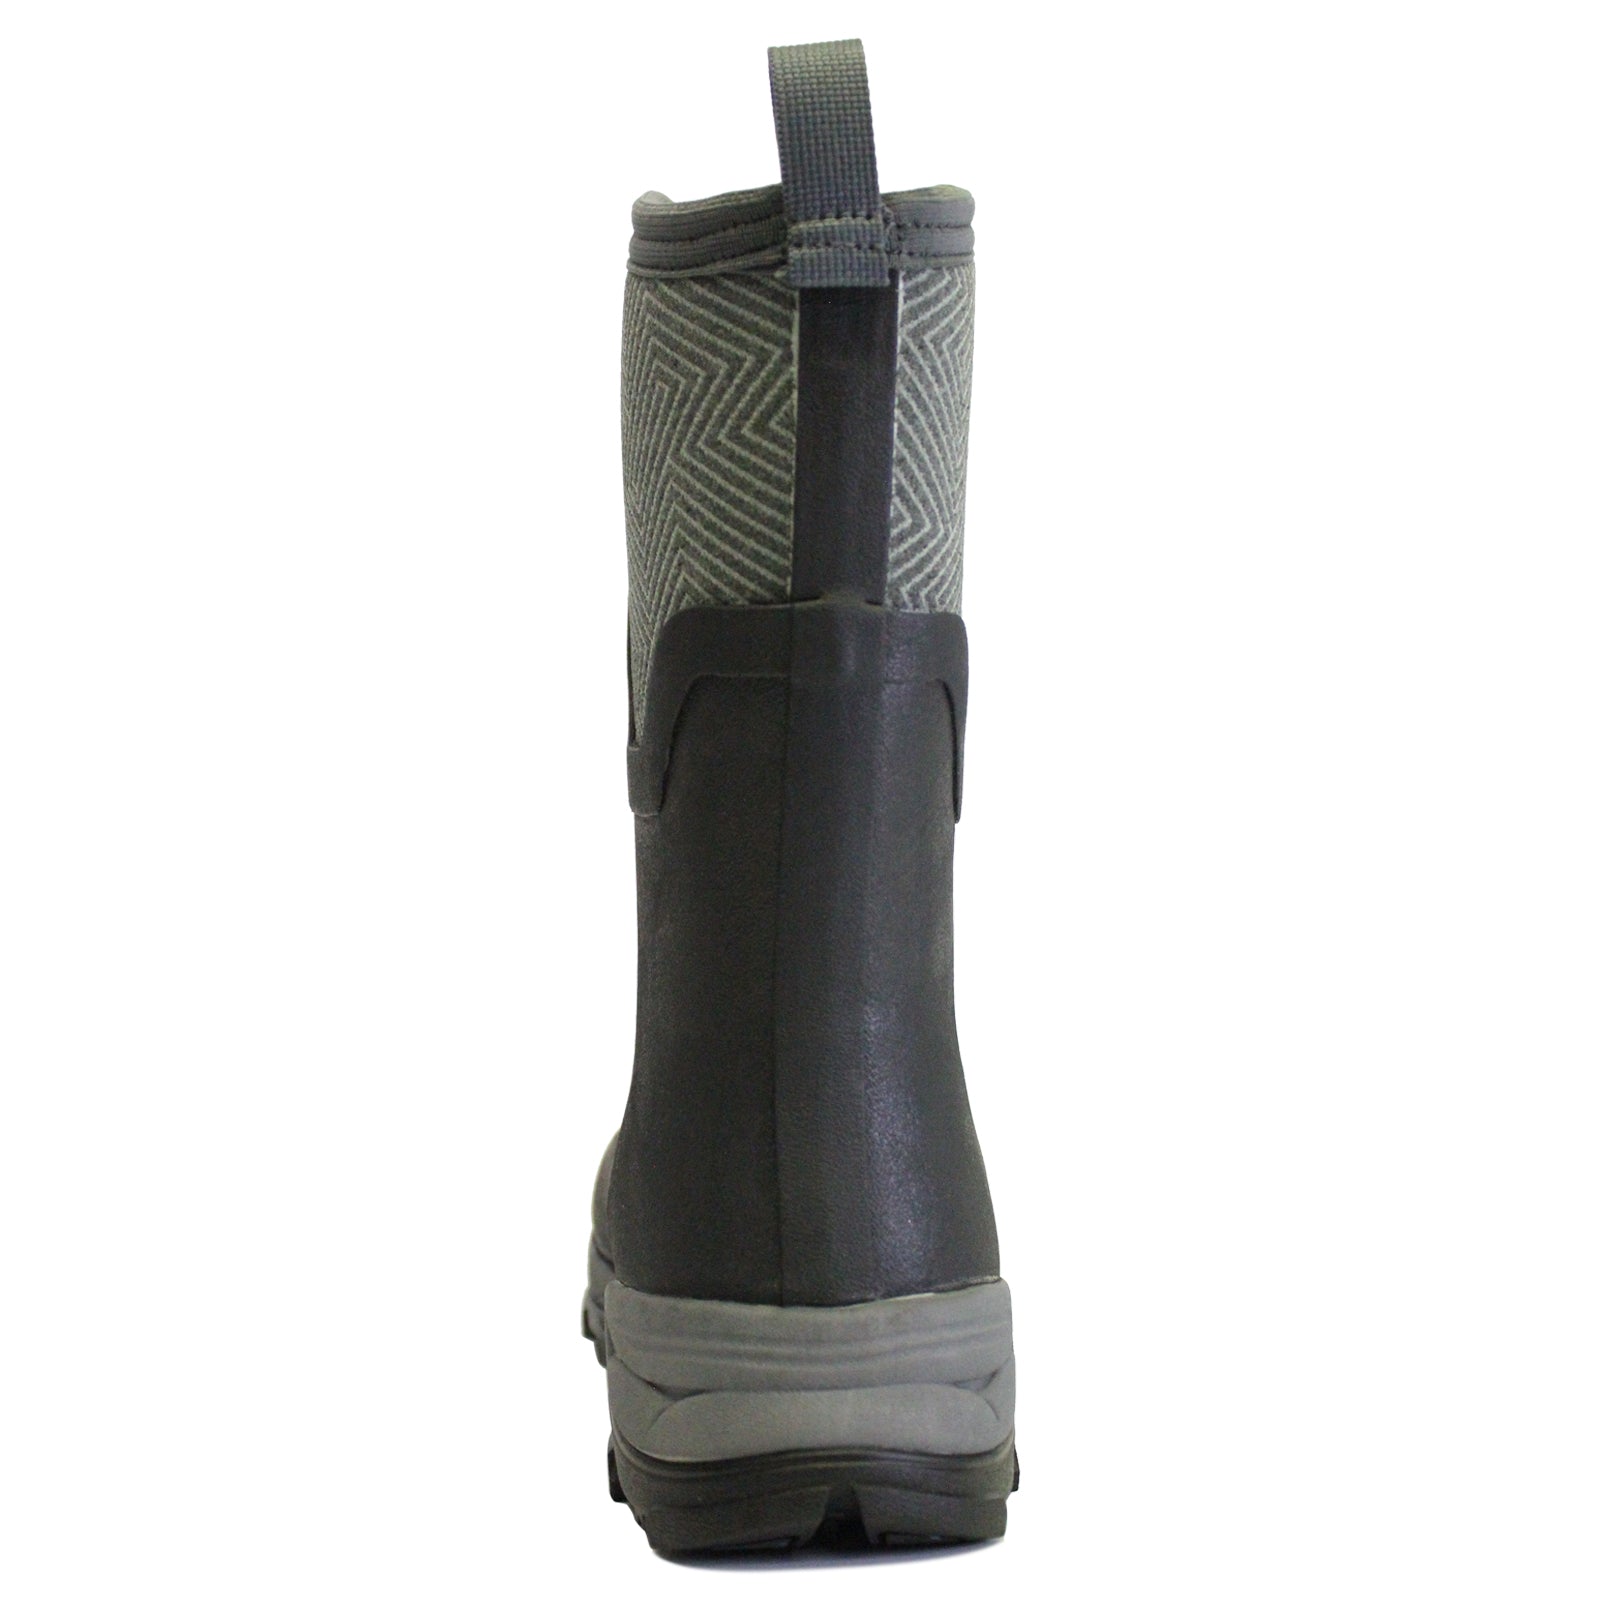 Muck Boot Arctic Ice Vibram Arctic Grip All Terrain Waterproof Women's Boots#color_black gray geometric